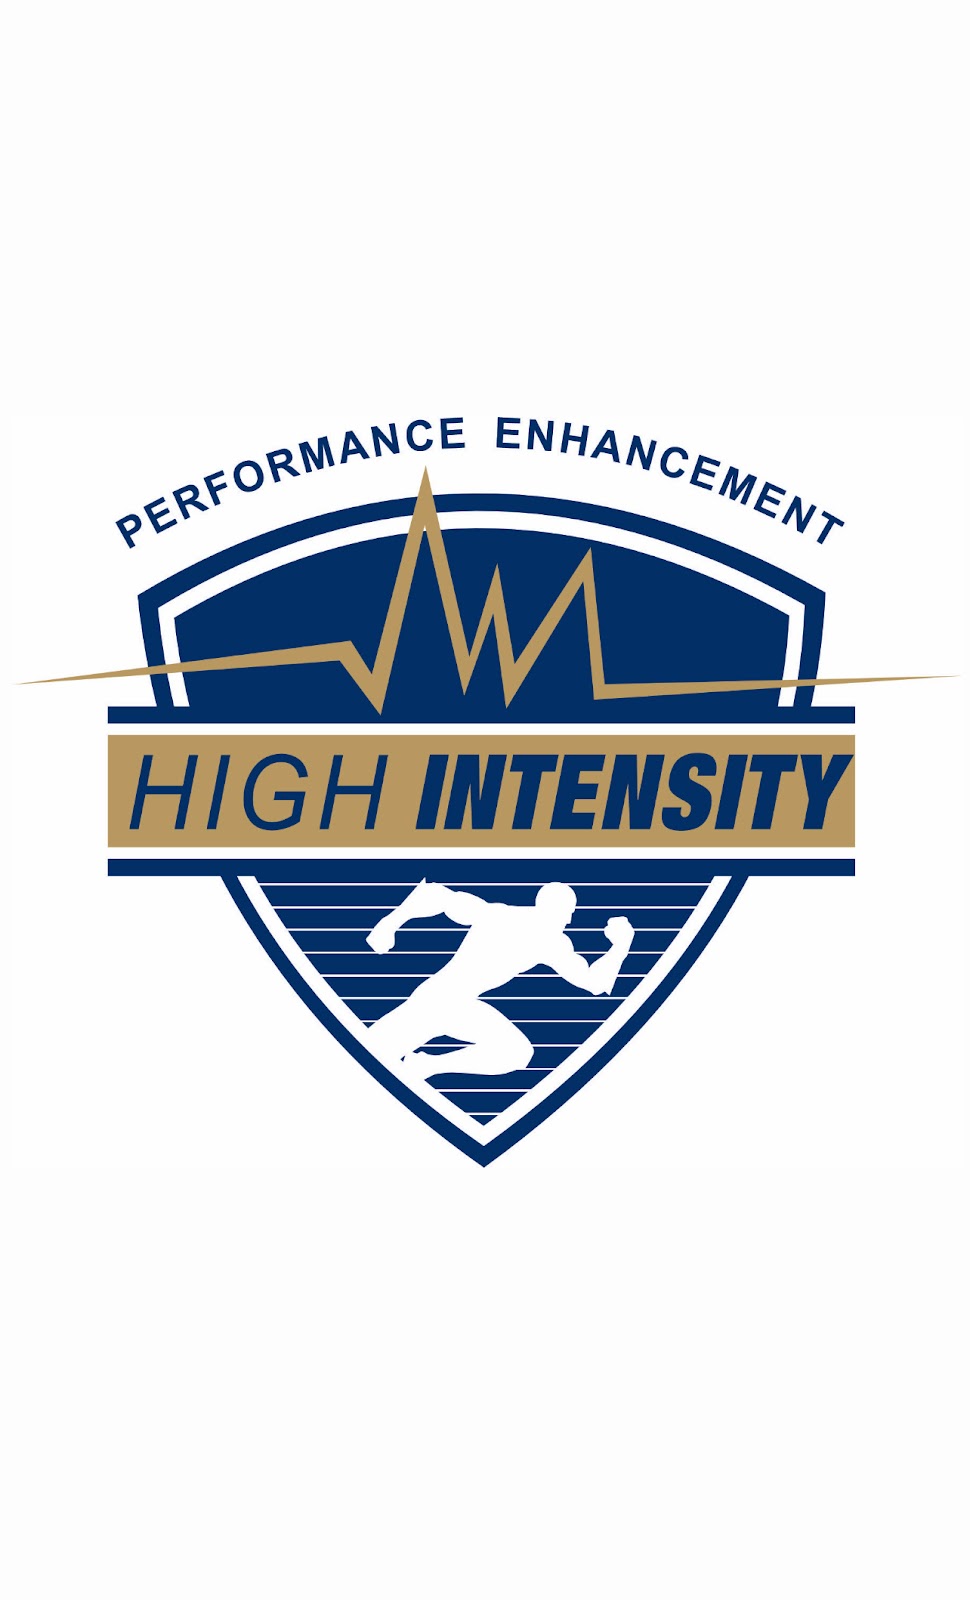 High Intensity Performance Enhancement | 30 Nutmeg Dr, Trumbull, CT 06611 | Phone: (203) 800-6362